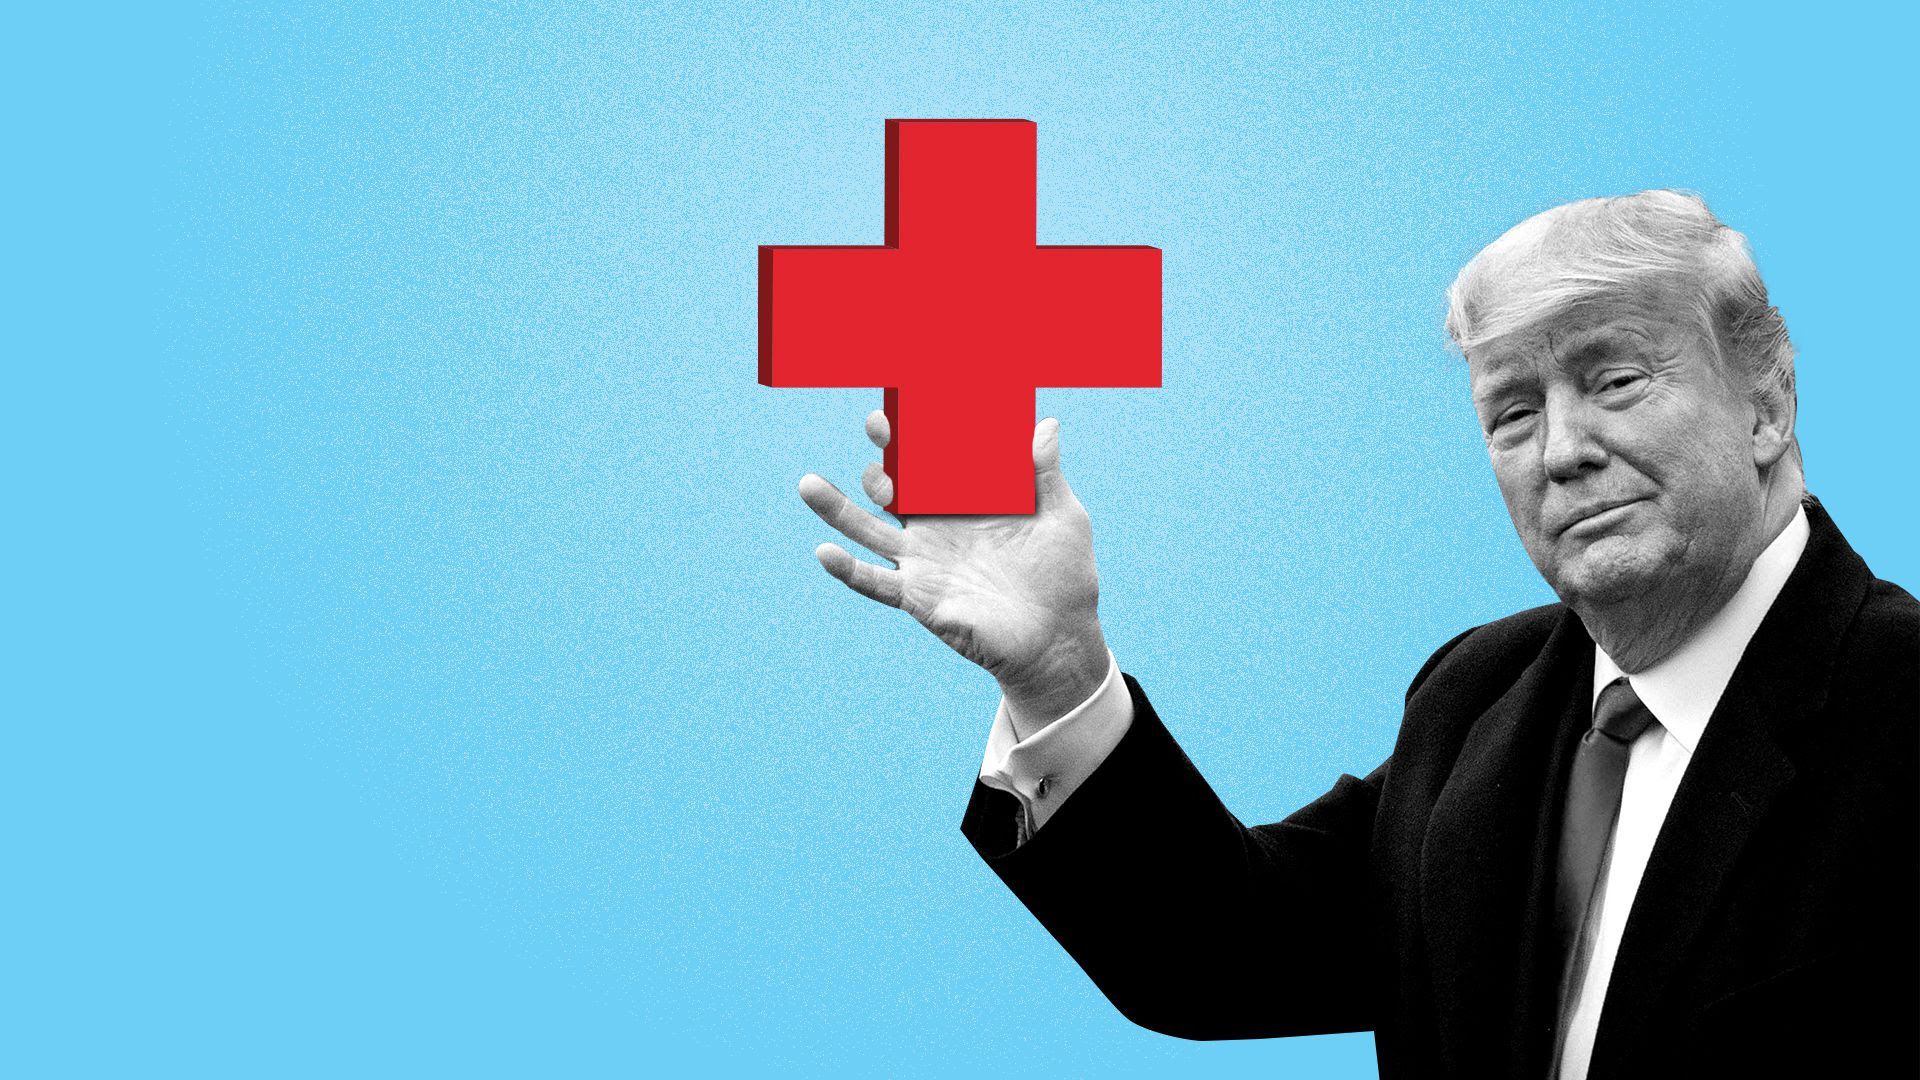 Illustration of President Trump holding the health symbol